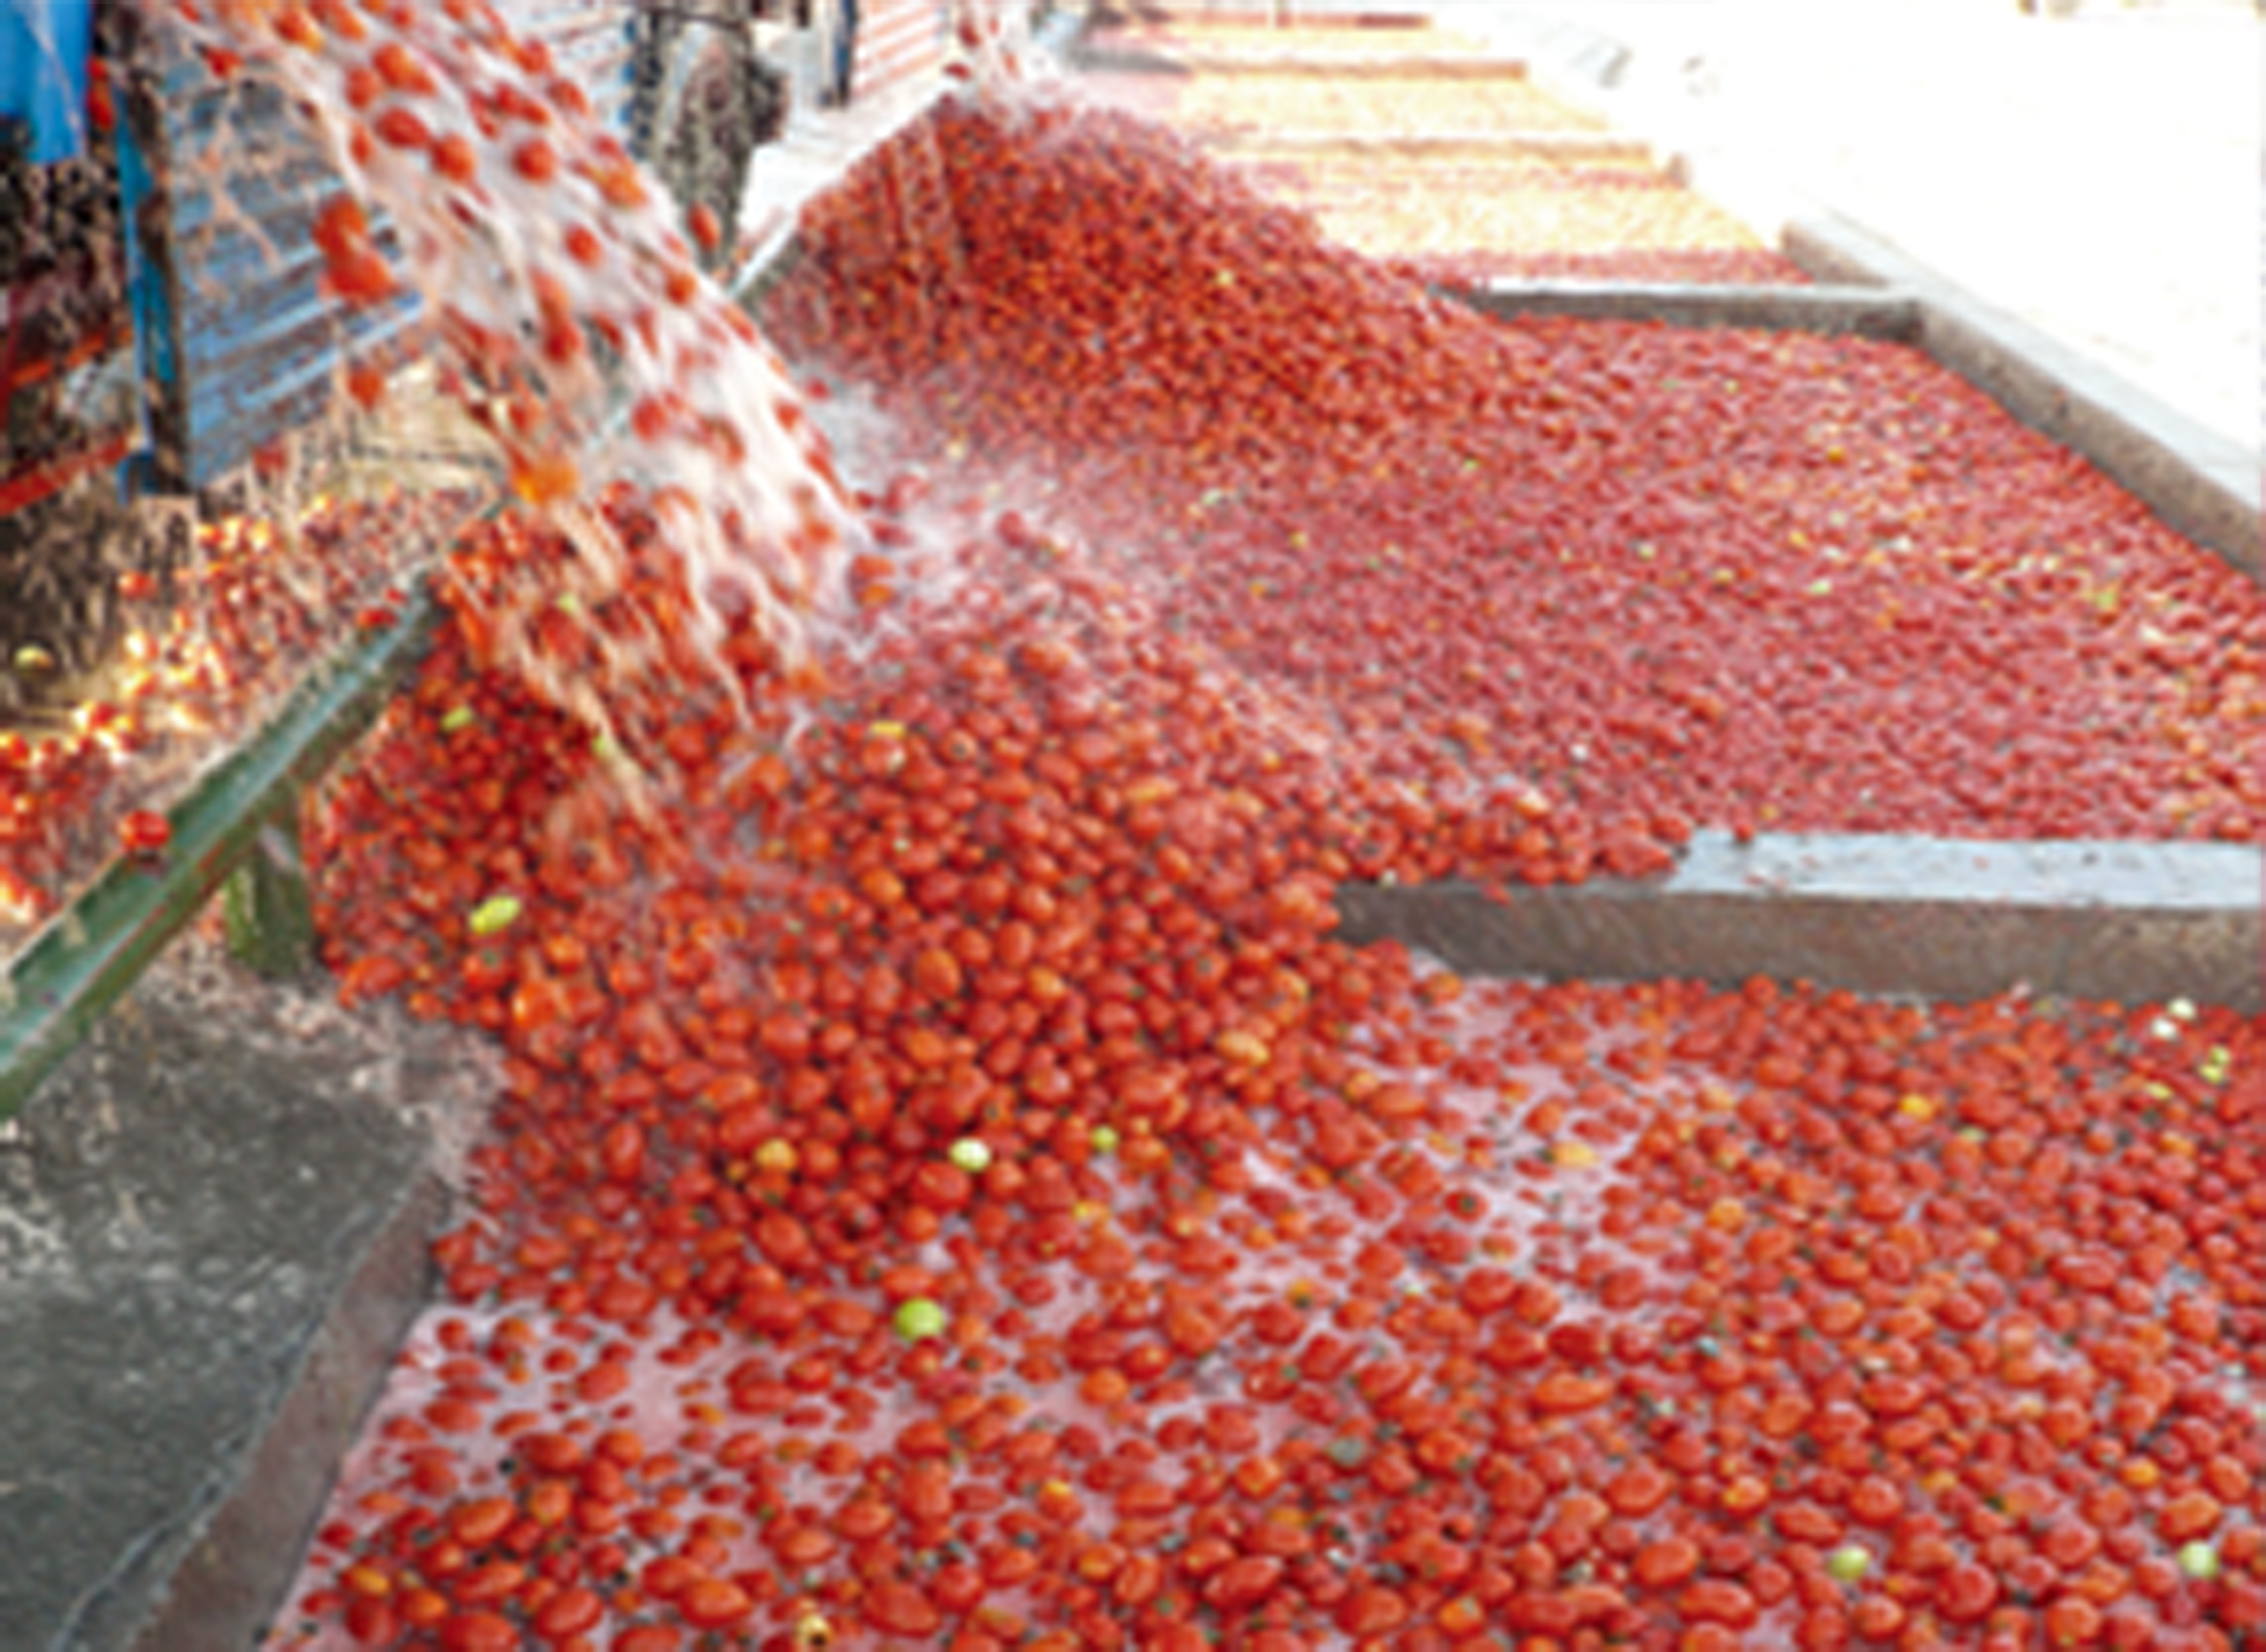 Tomato Processing Equipment